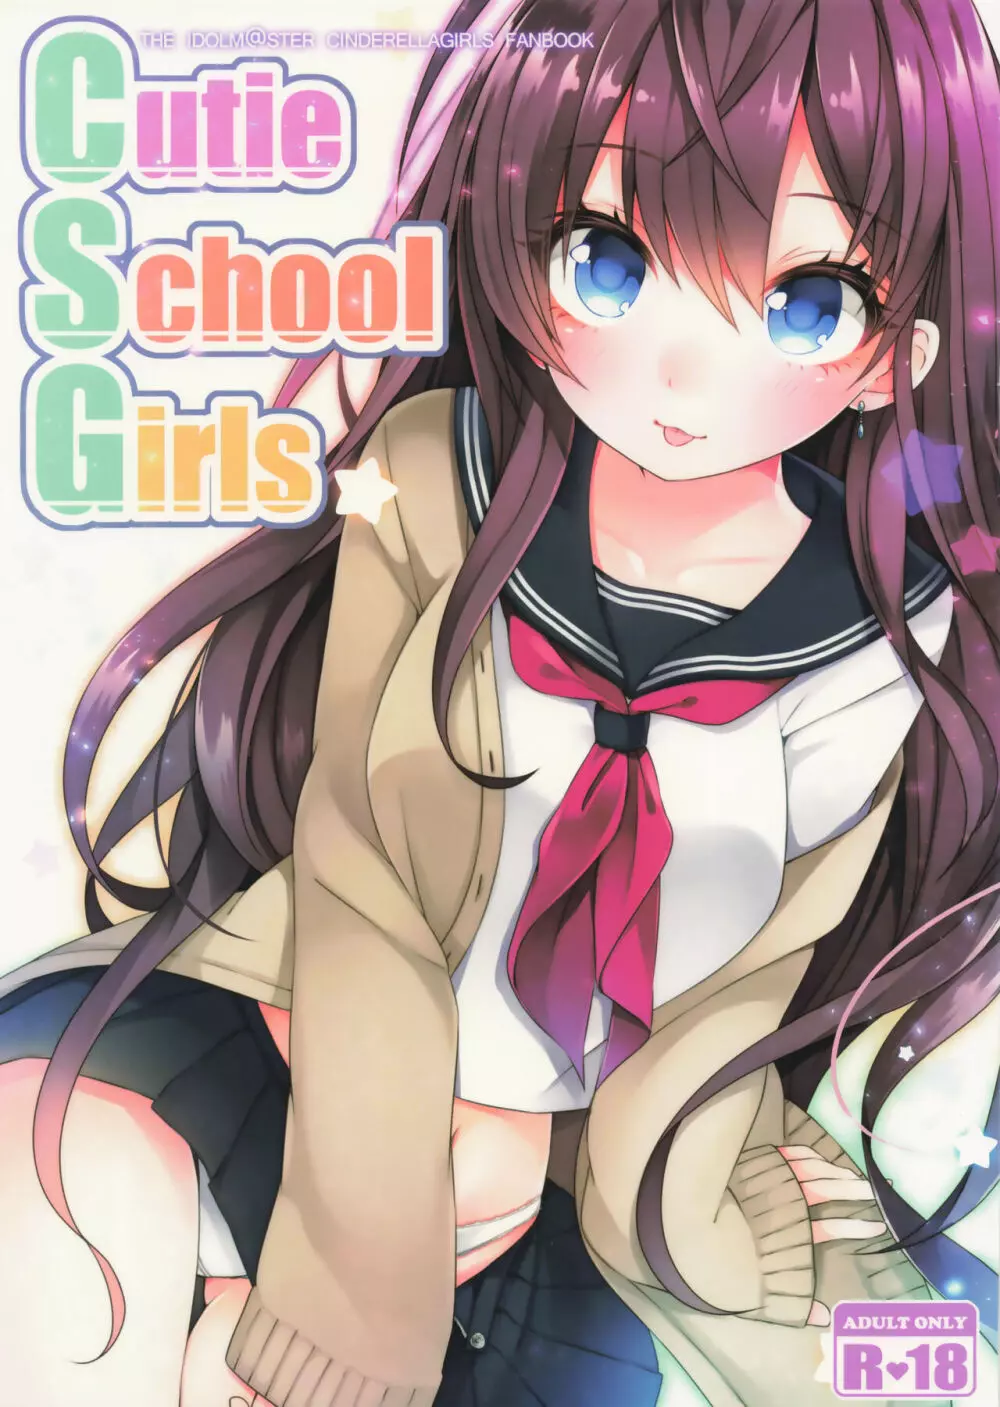 Cutie School Girls Page.1